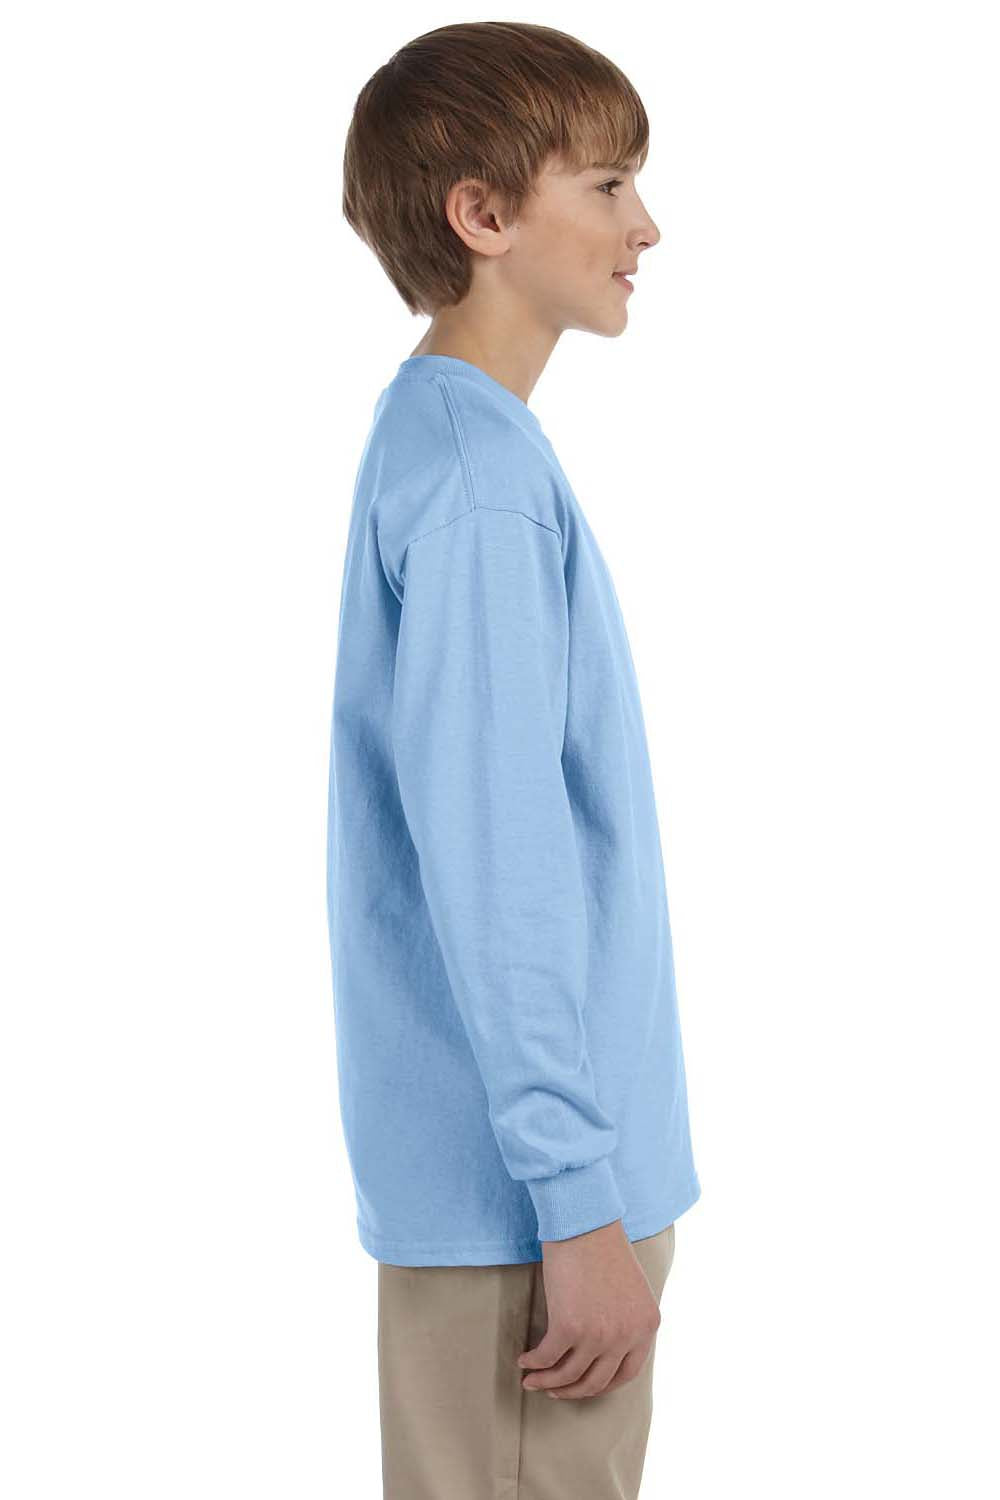 Gildan G240B Youth Ultra Long Sleeve Crewneck T-Shirt Light Blue Side